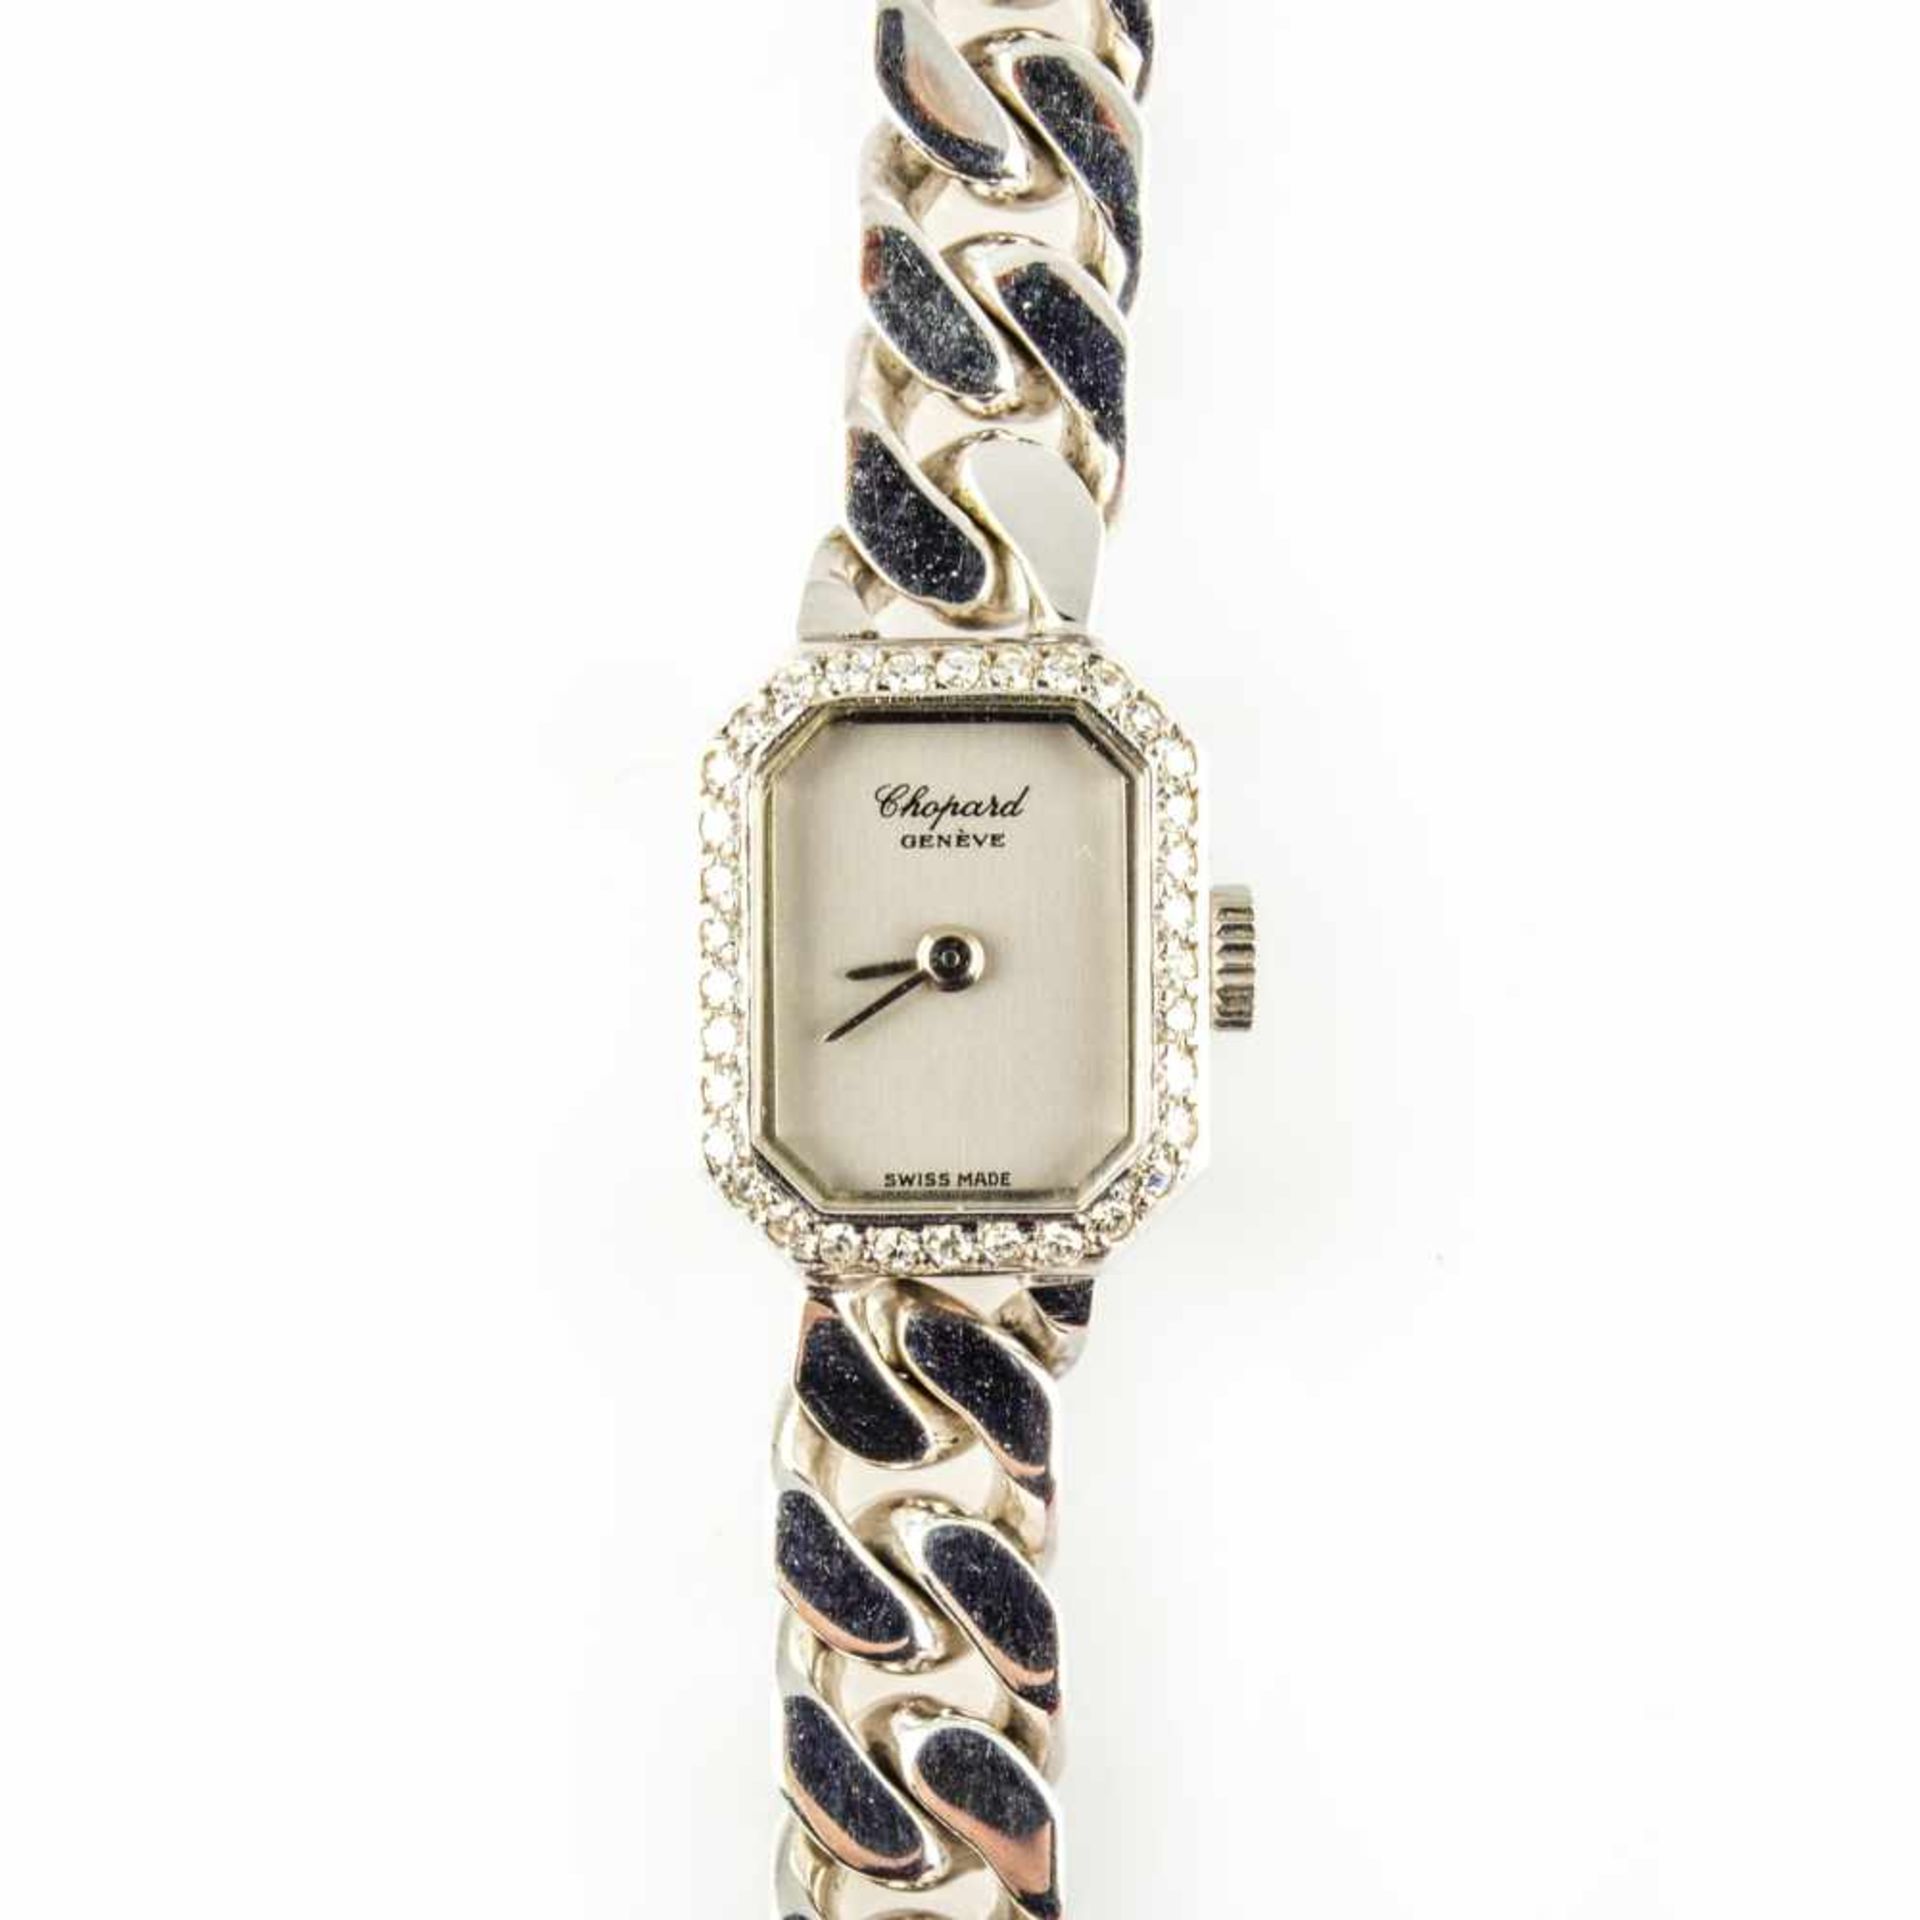 Chopard women's wristwatch - Image 2 of 4